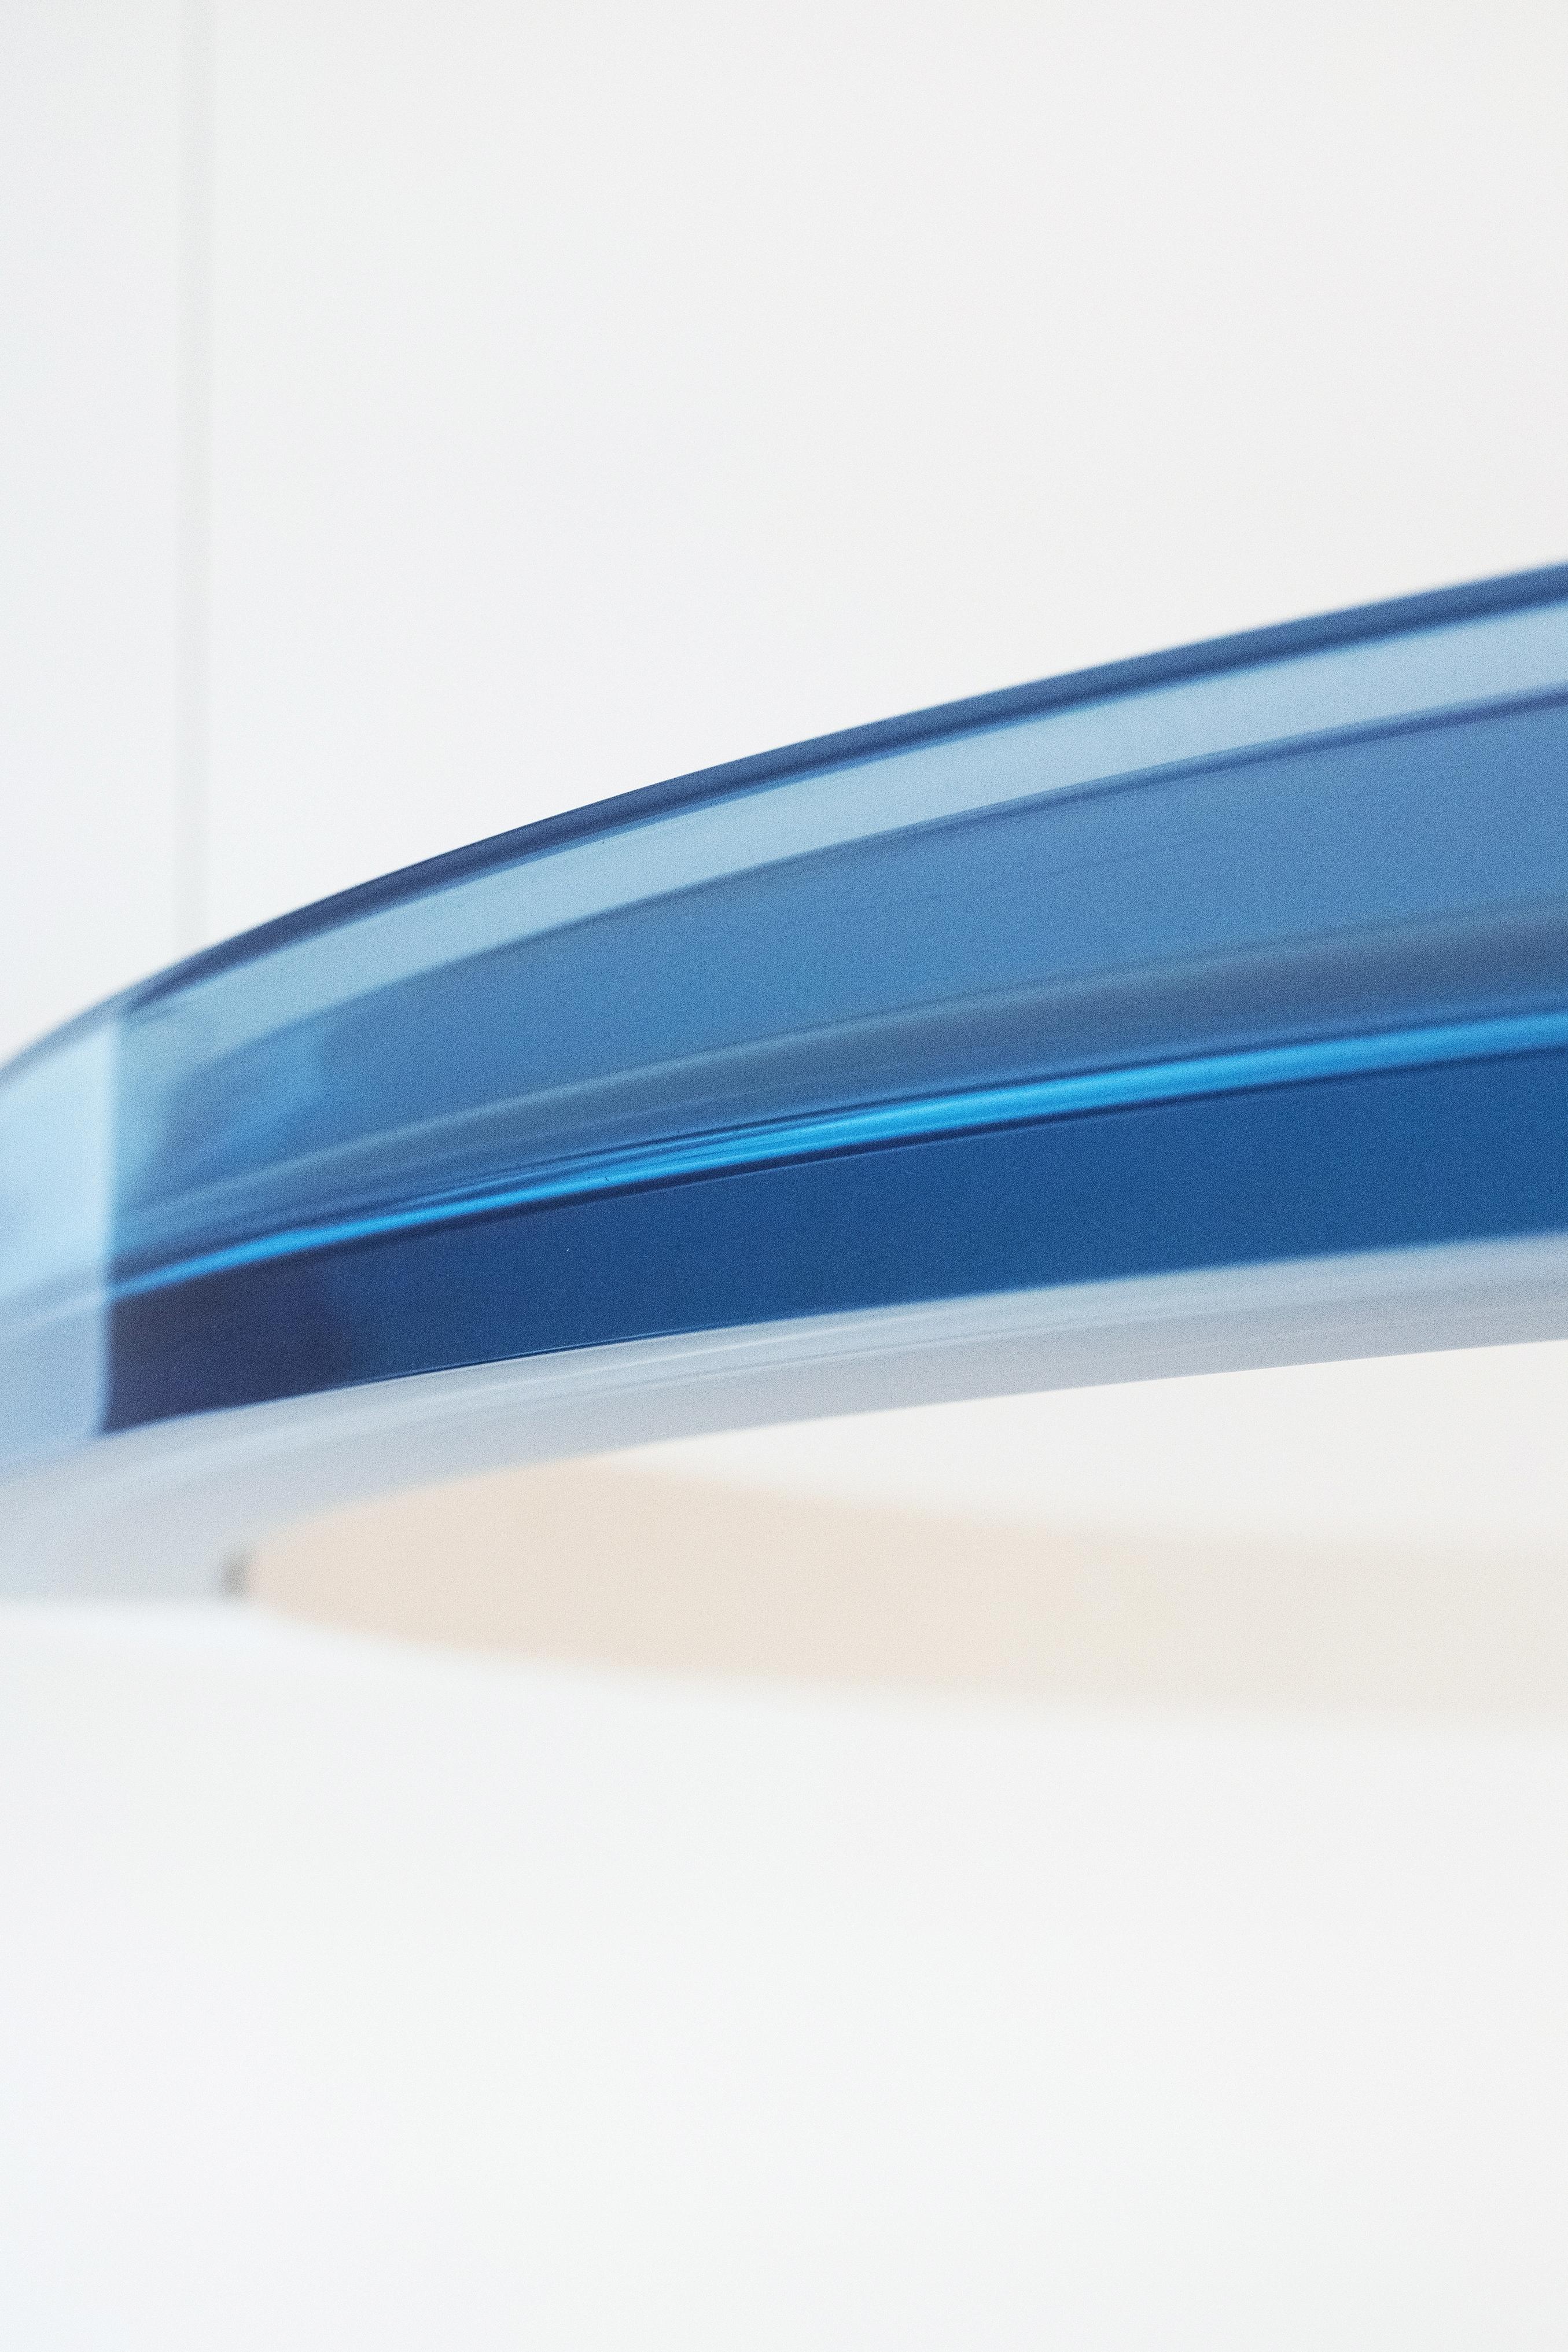 Dutch Sabine Marcelis Contemporary Blue Resin Circular Chandelier, Filter Series, 2020 For Sale